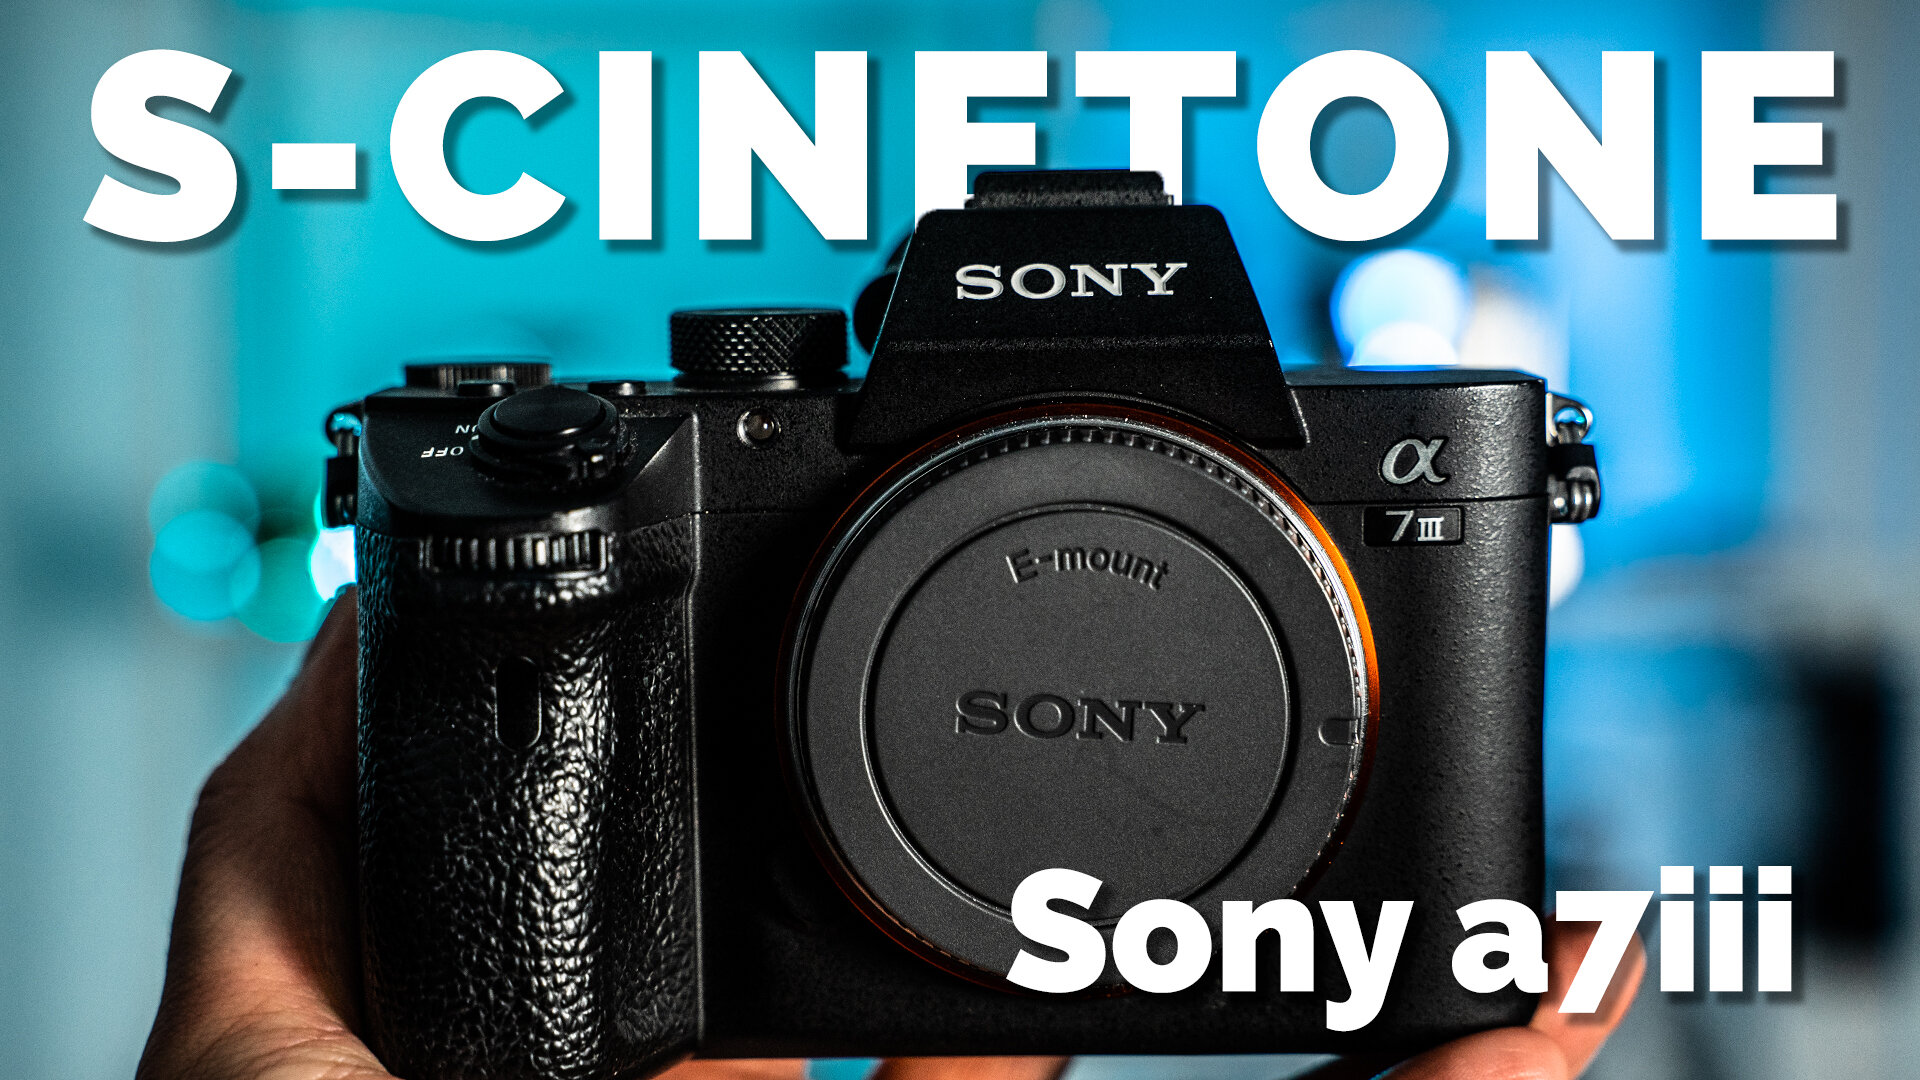 How to Get S-Cinetone Sony a7iii — So